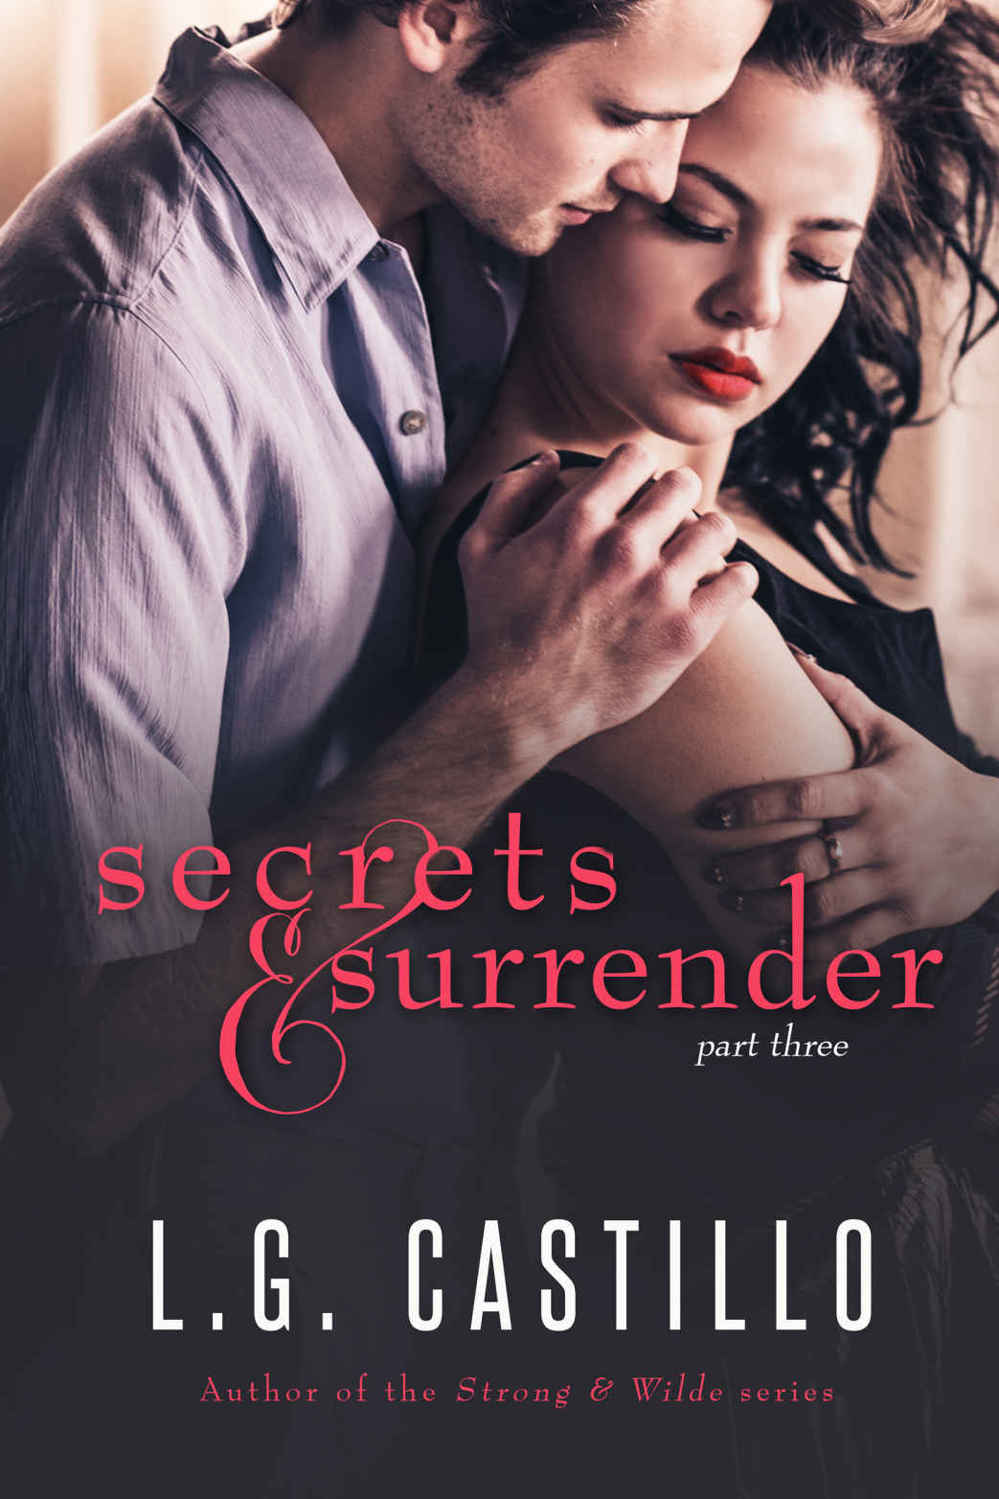 Secrets & Surrender 3 by L.G. Castillo